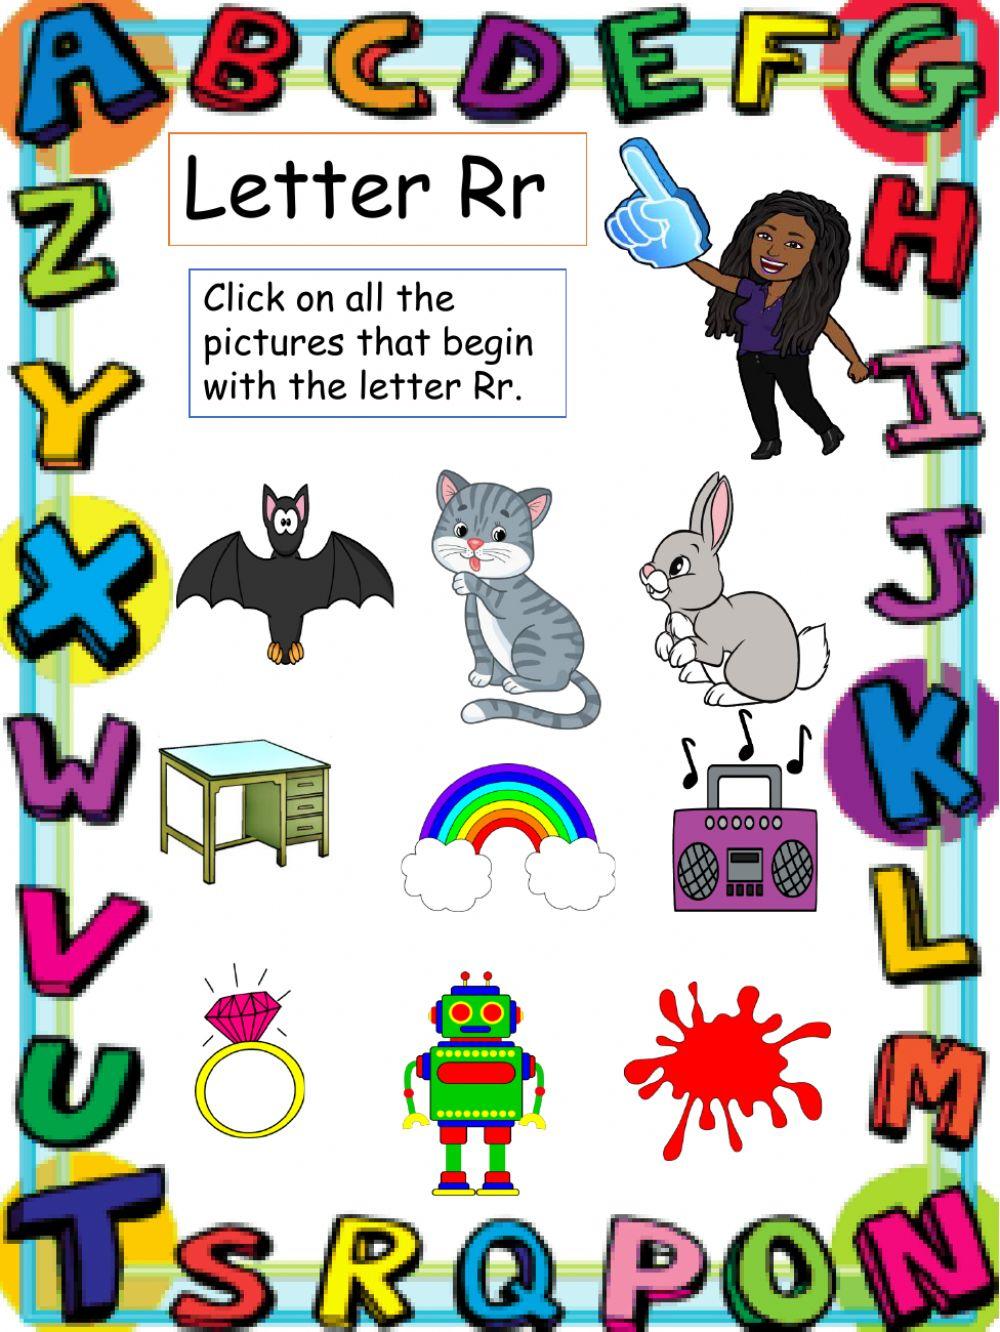 Letter Rr